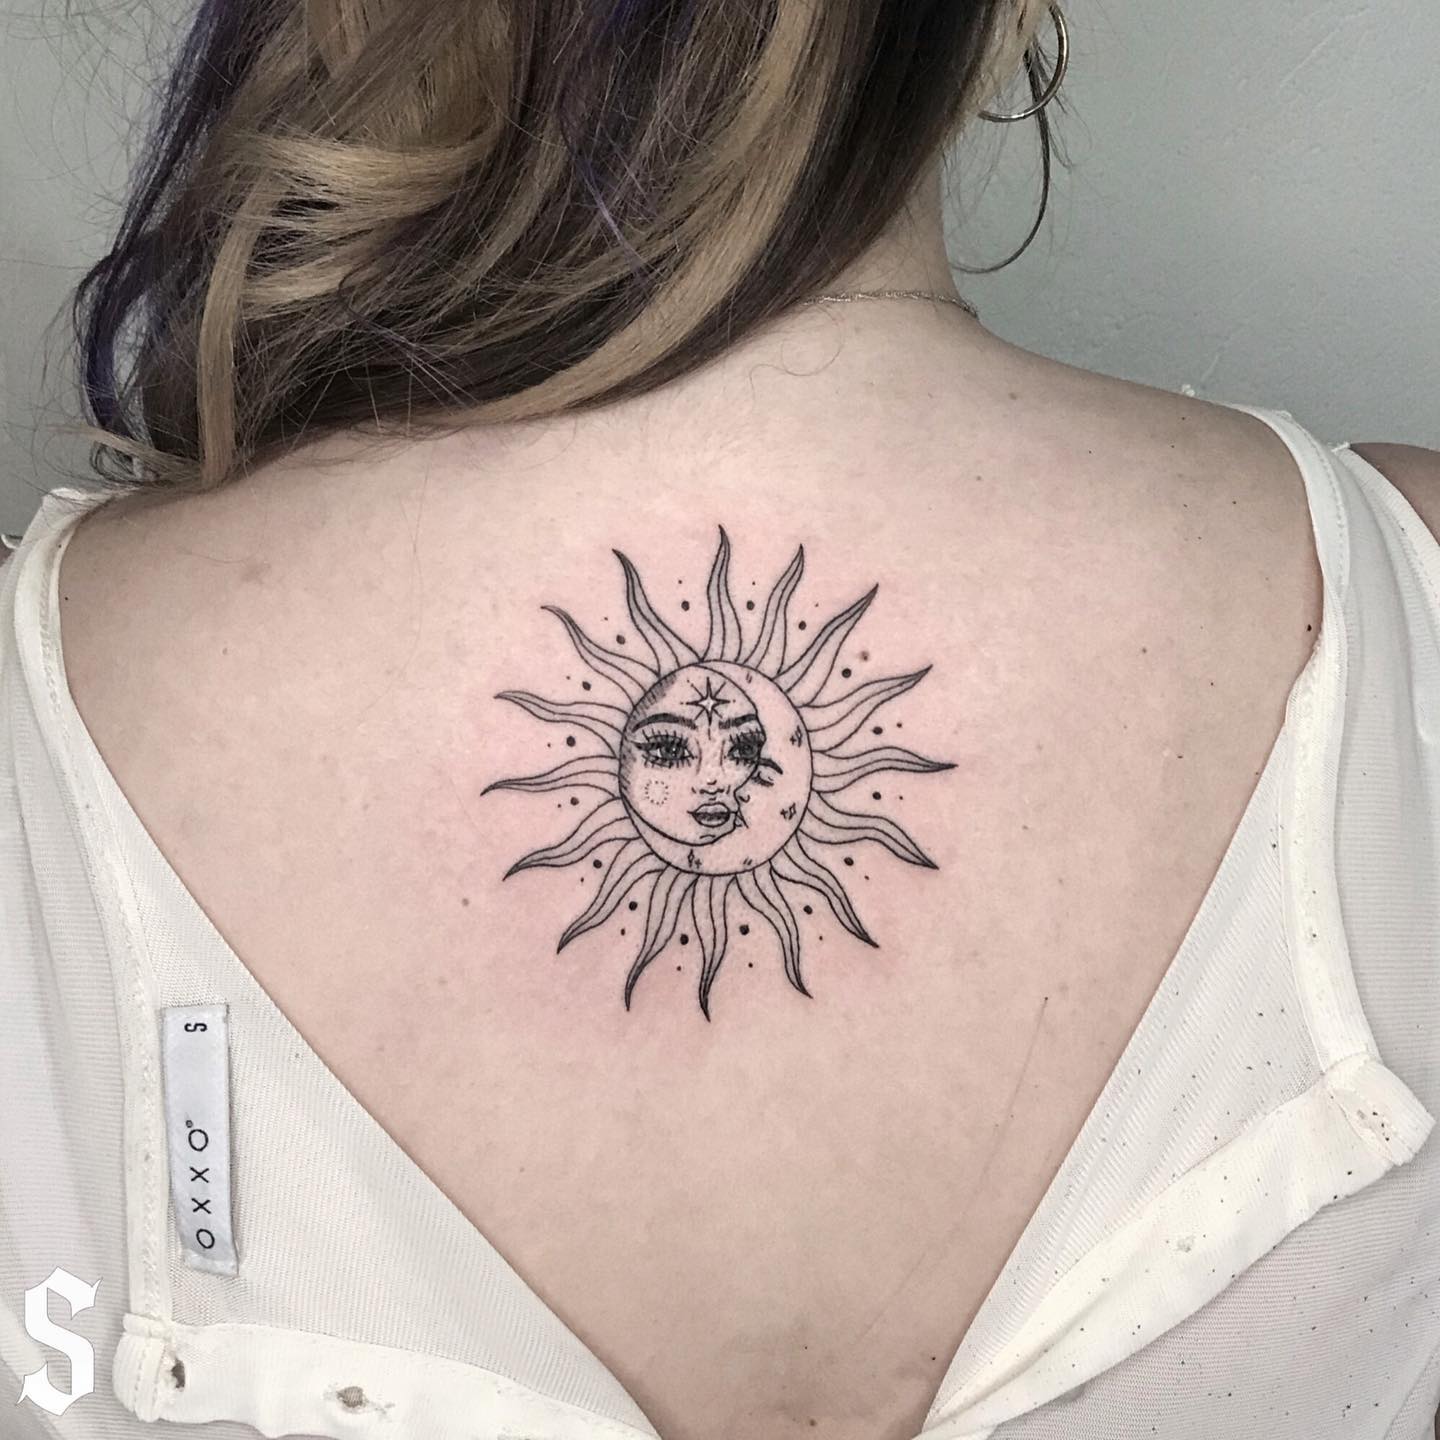 Tiny Sun Tattoo On upper Back Of Girl